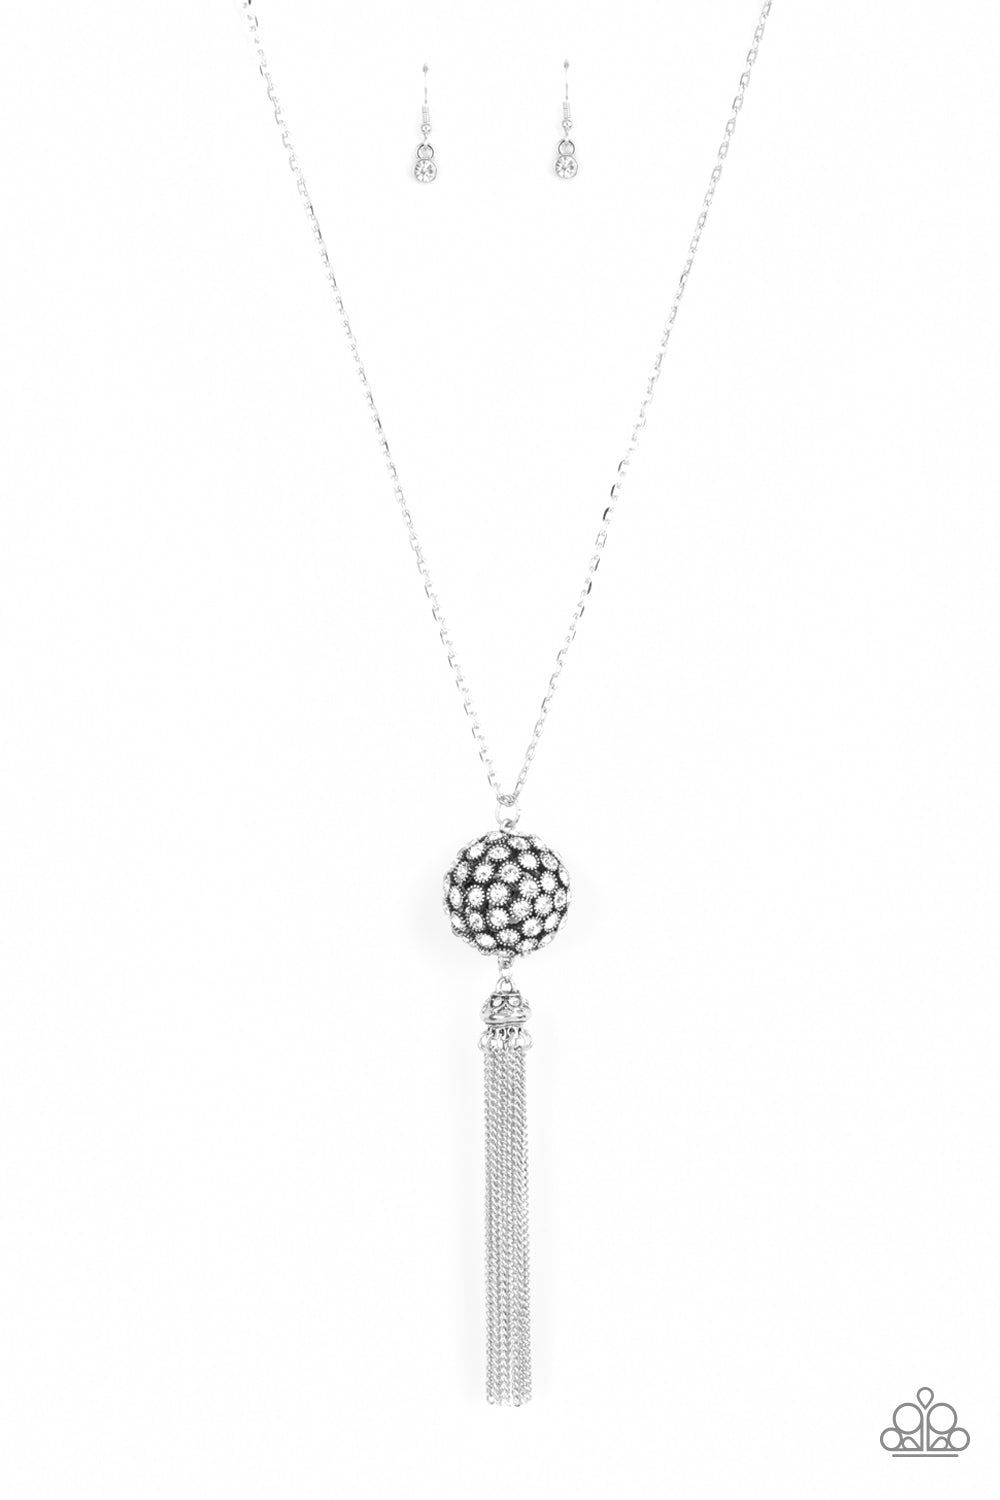 Rhinestone Revolution Necklace (White, Black)